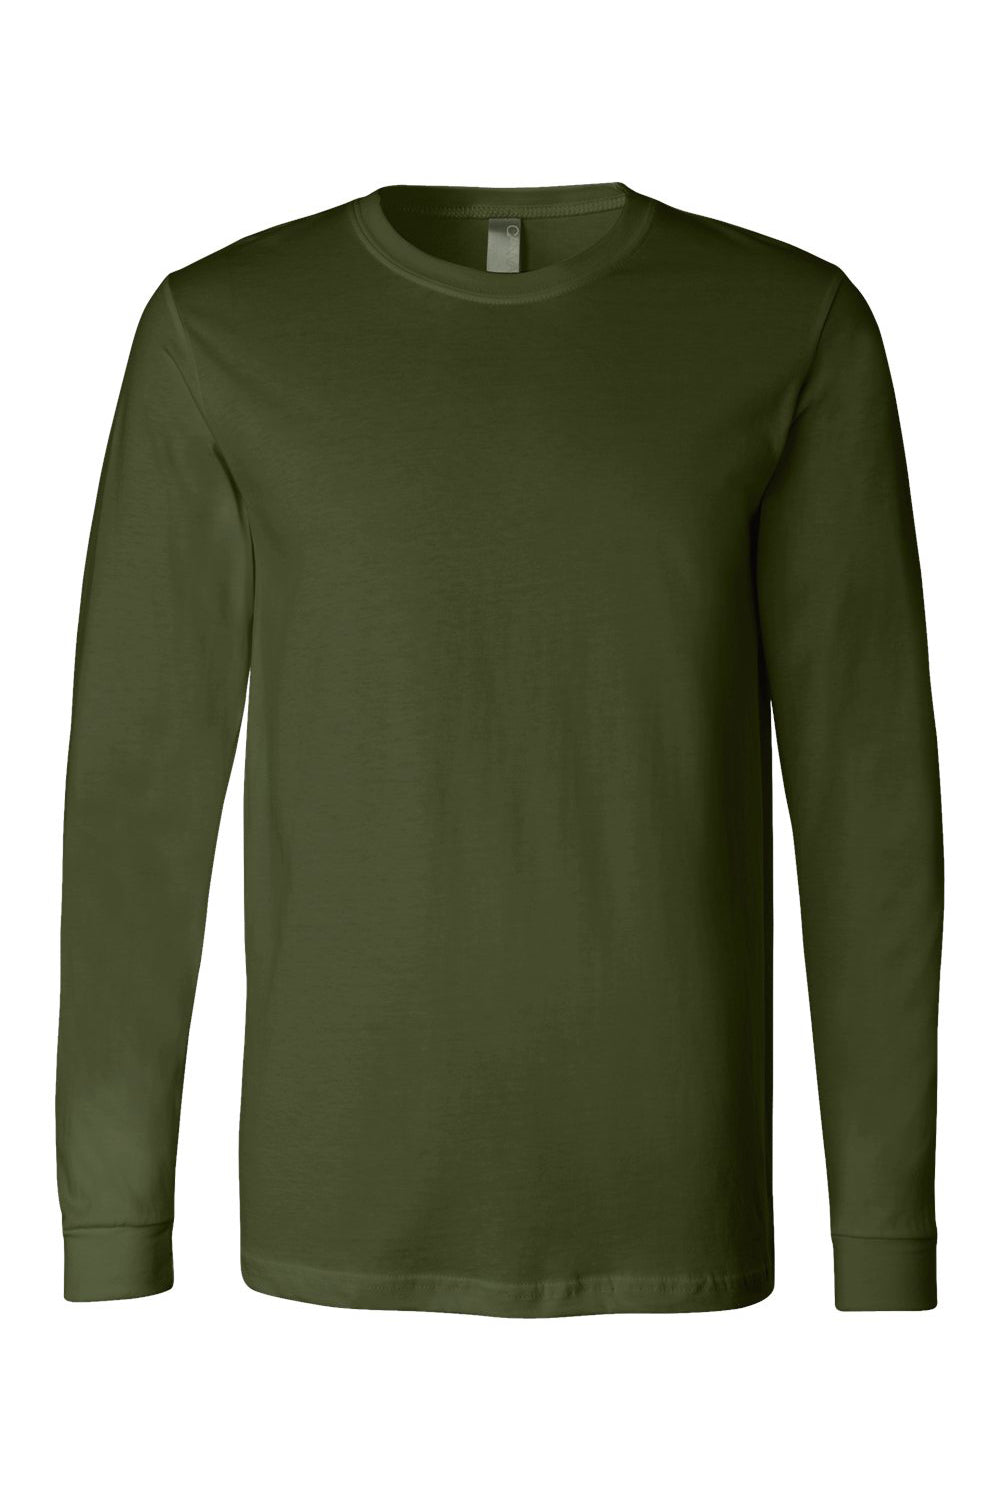 Bella + Canvas BC3501/3501 Mens Jersey Long Sleeve Crewneck T-Shirt Olive Green Flat Front